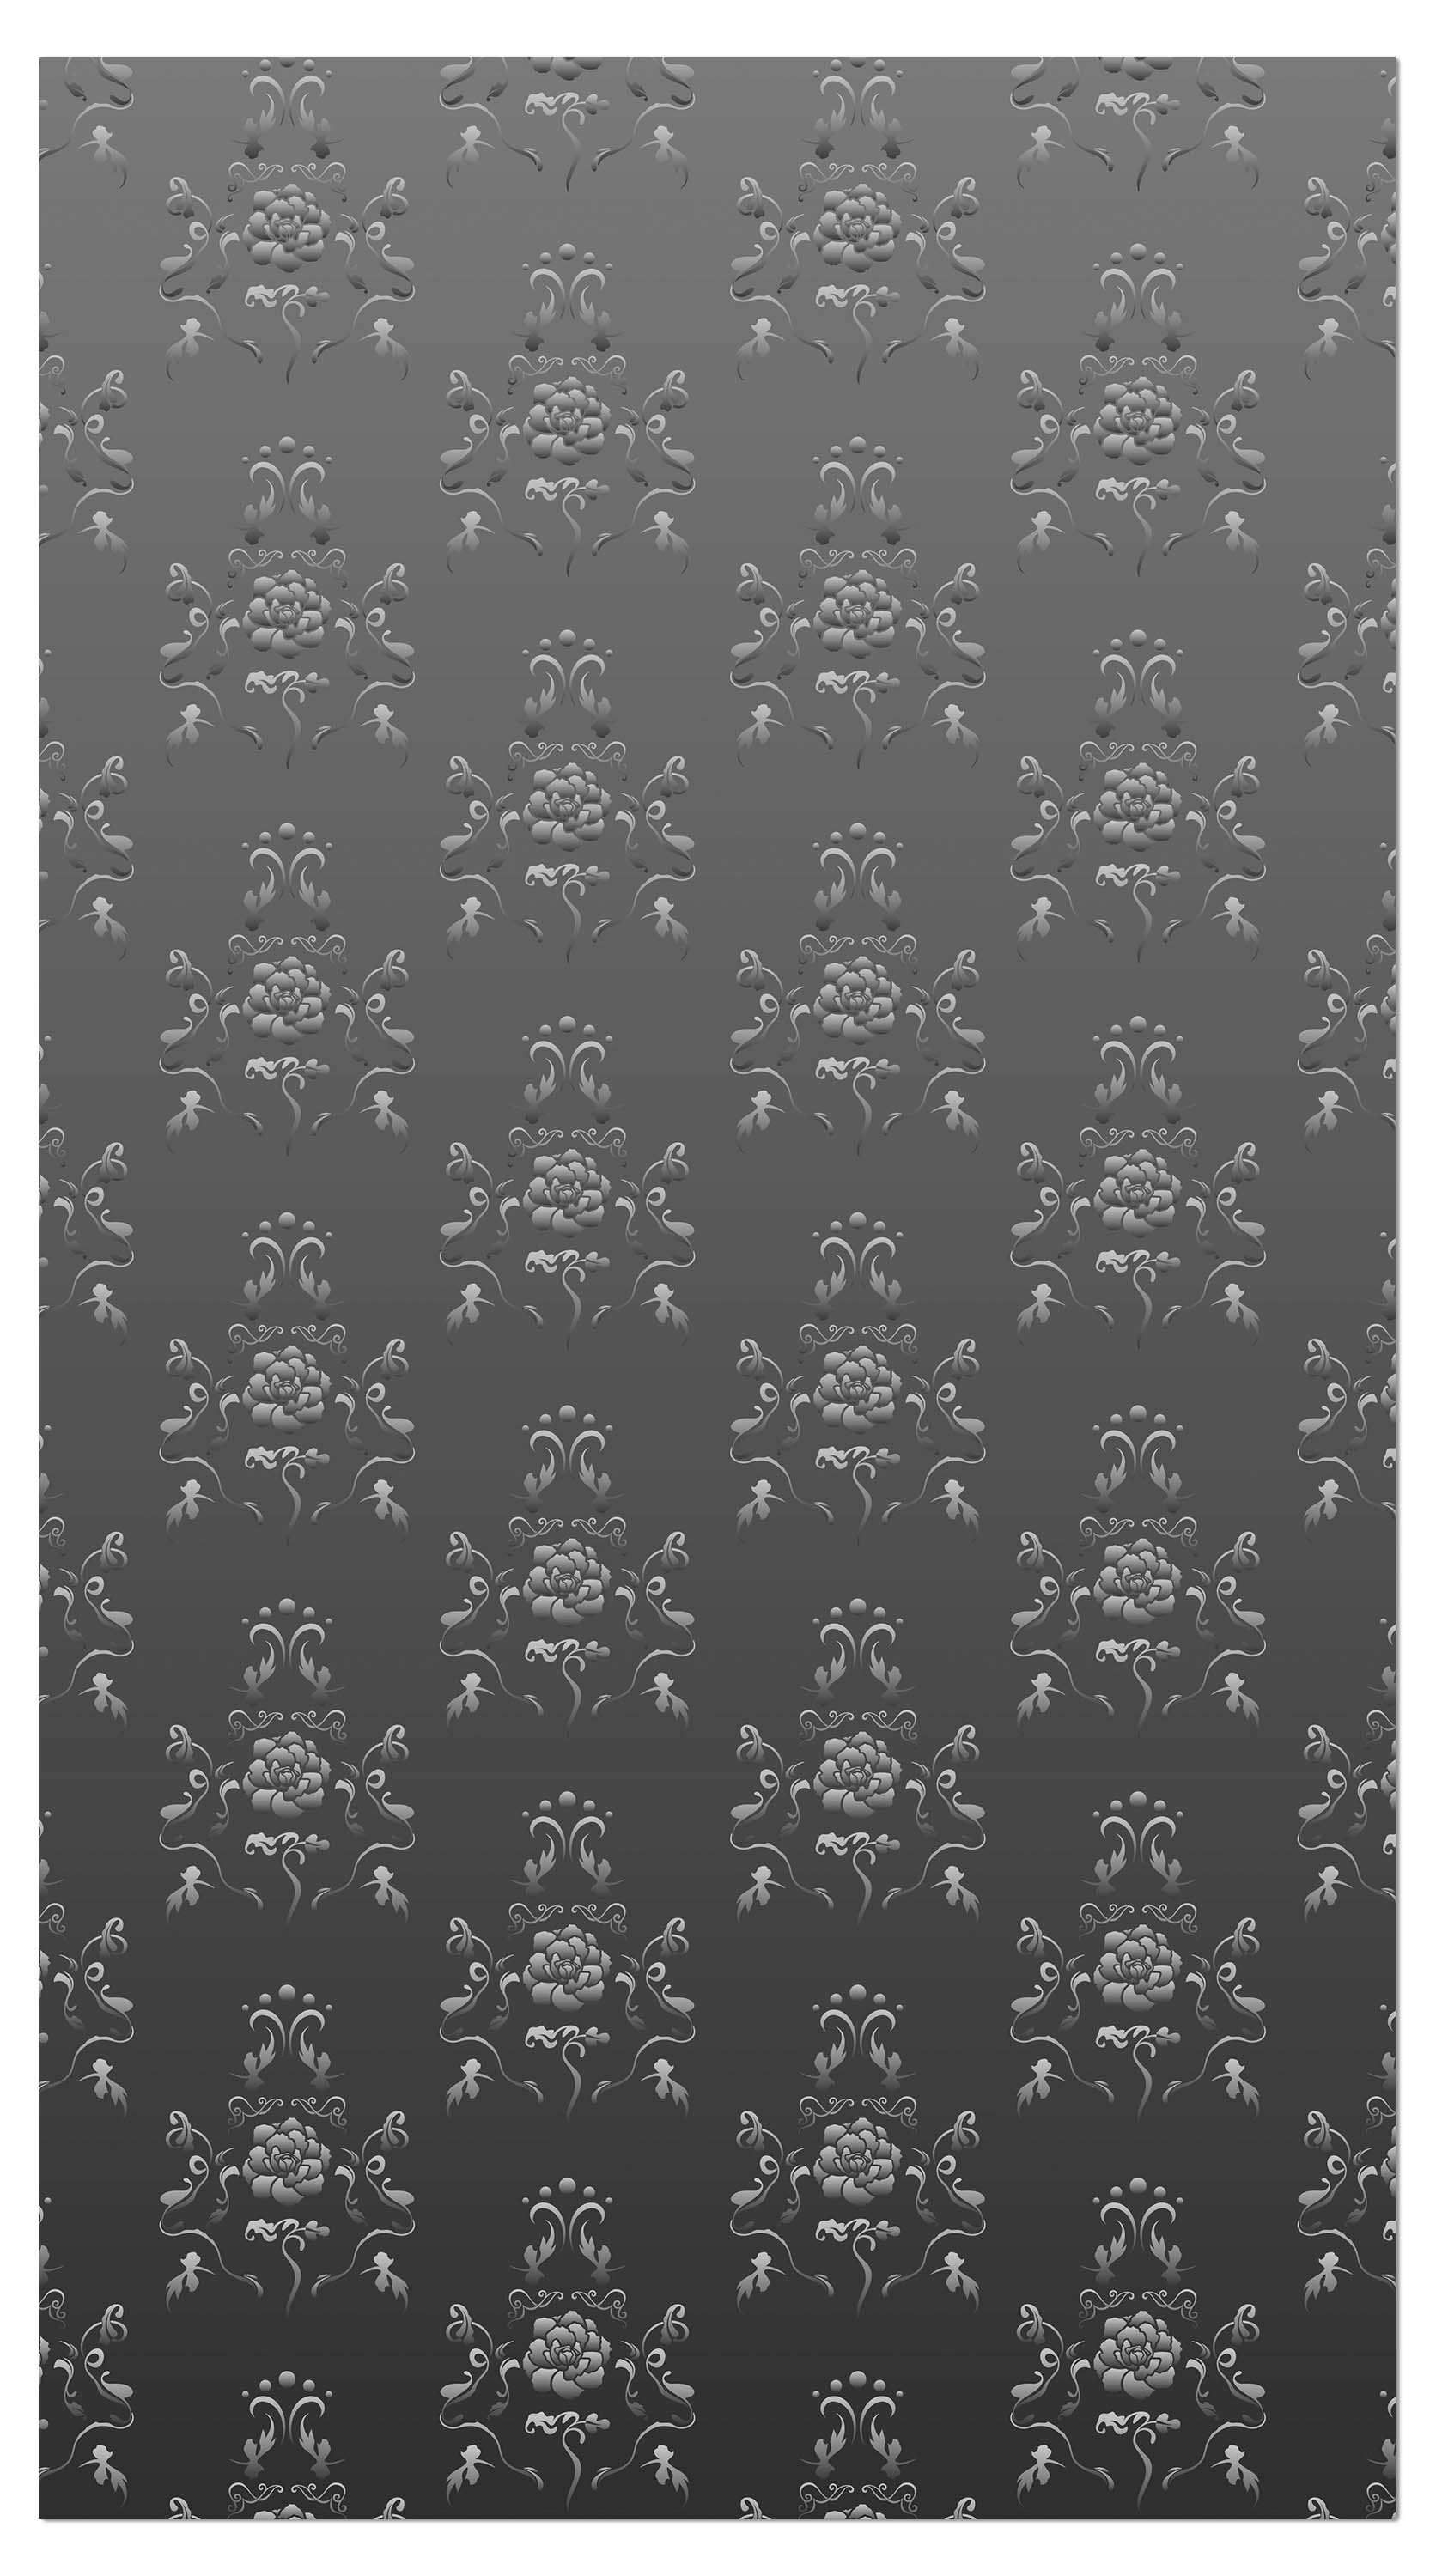 Garderobe Barock Schwarzgrau Muster M0122 entdecken - Bild 4